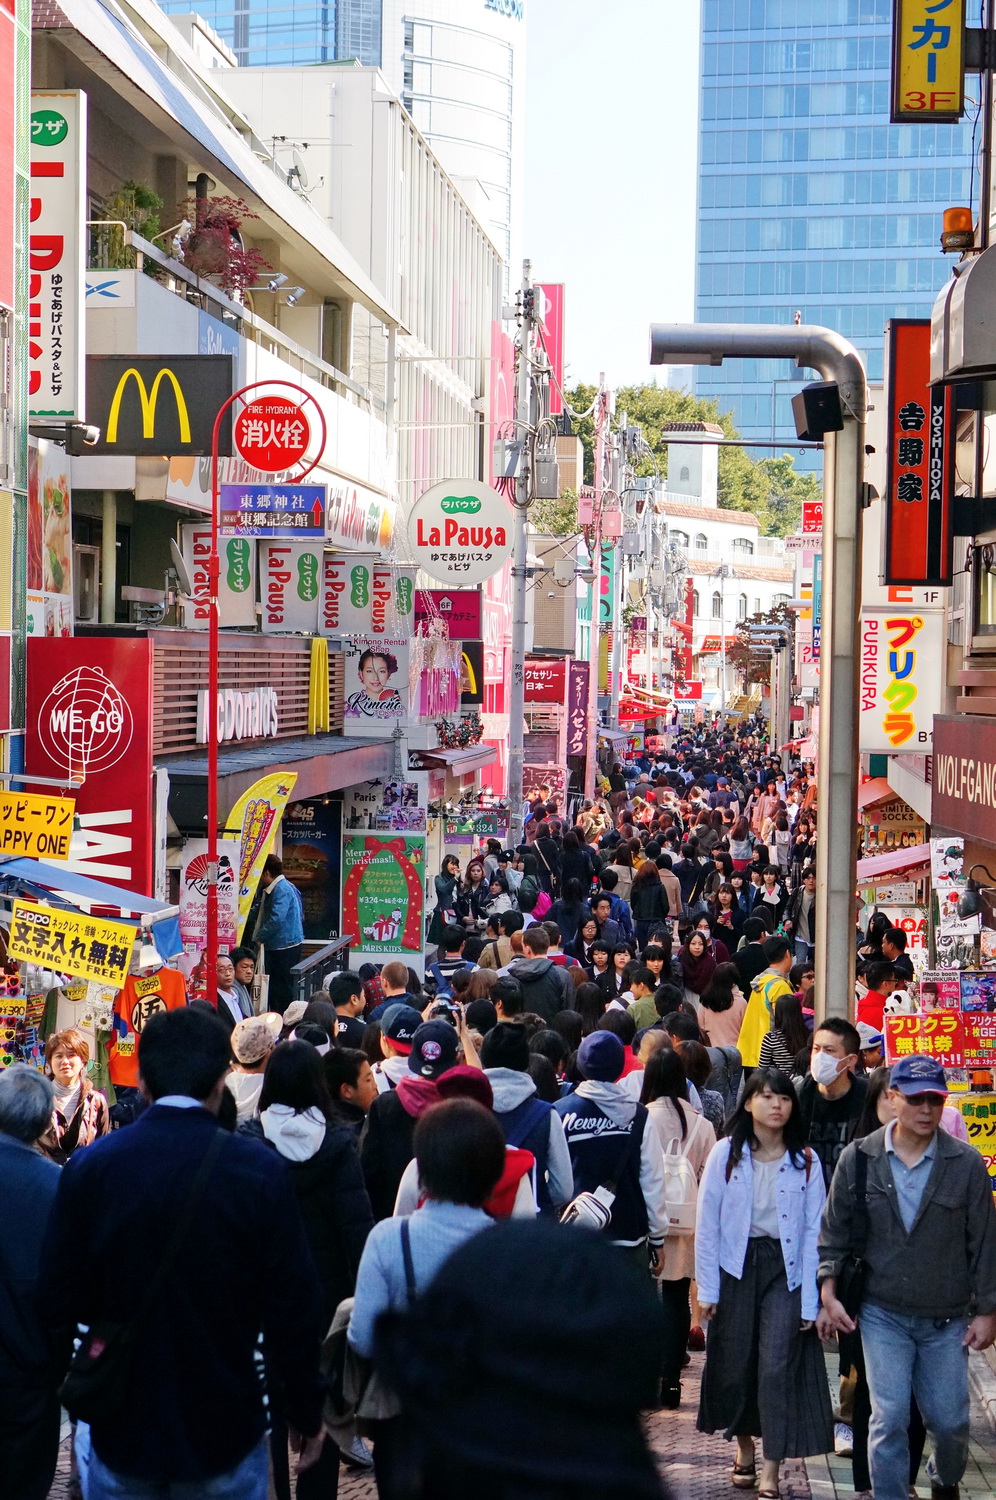 takeshita-dori, takeshita street, tokyo city guide, tokyo, japan, japan trip, street life, japon, voyage au japon